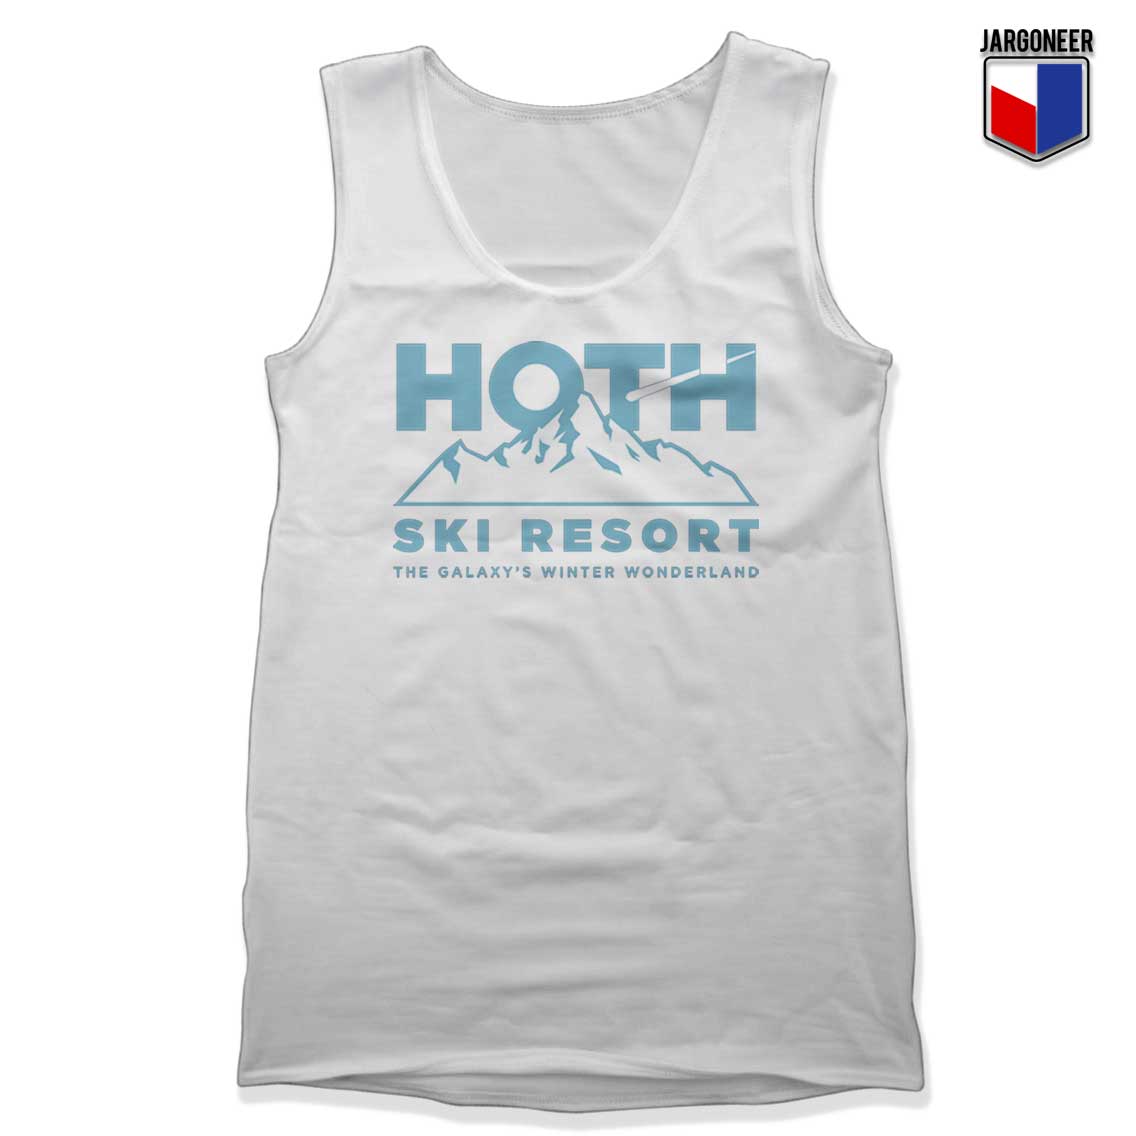 Hoth Ski Resort Tank Top - Shop Unique Graphic Cool Shirt Designs